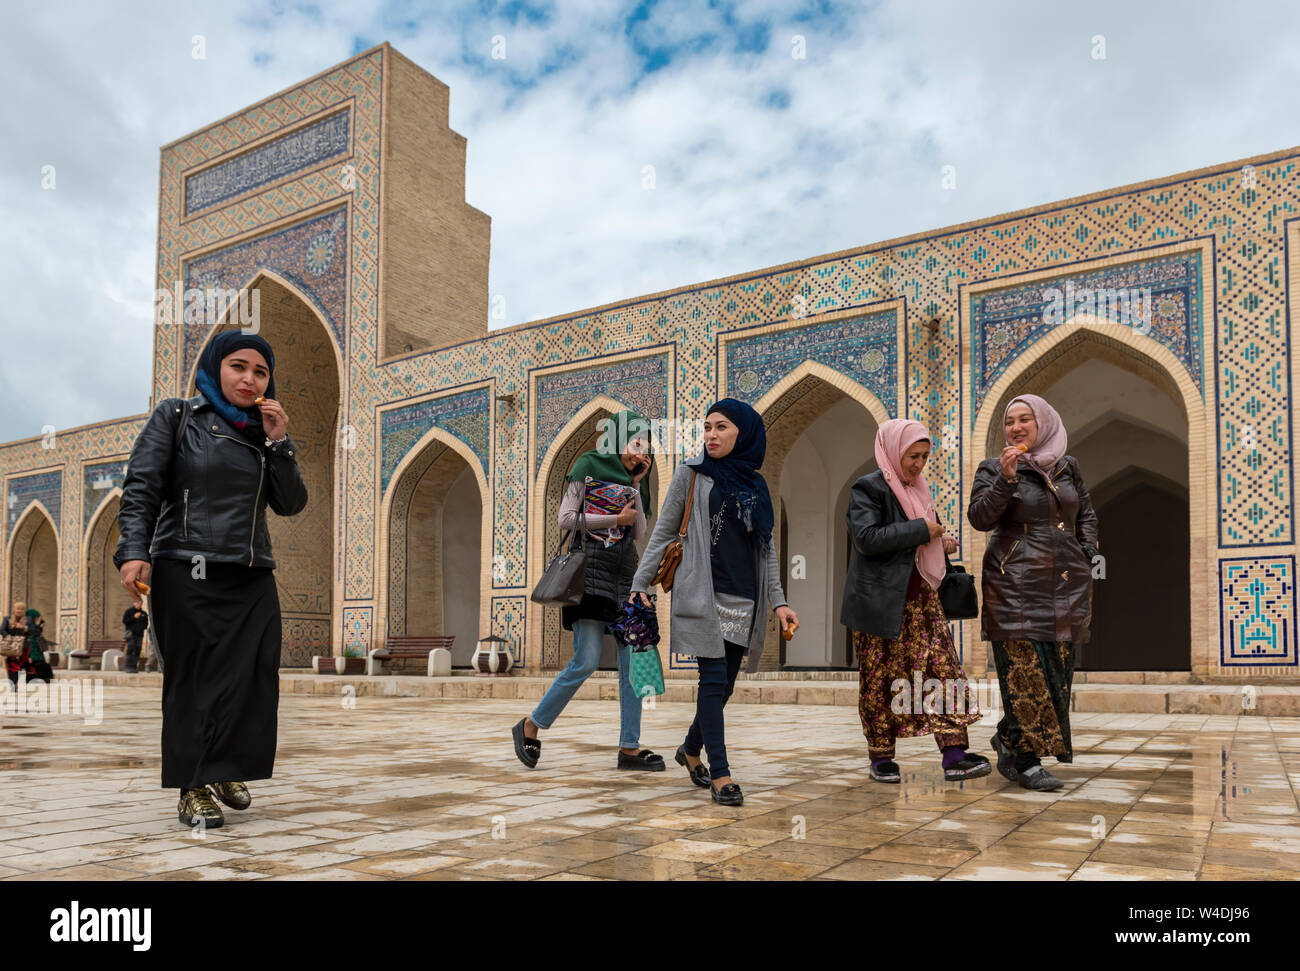 https://c8.alamy.com/comp/W4DJ96/young-uzbek-women-in-the-courtyard-of-kalan-mosque-kalon-bukhara-uzbekistan-W4DJ96.jpg